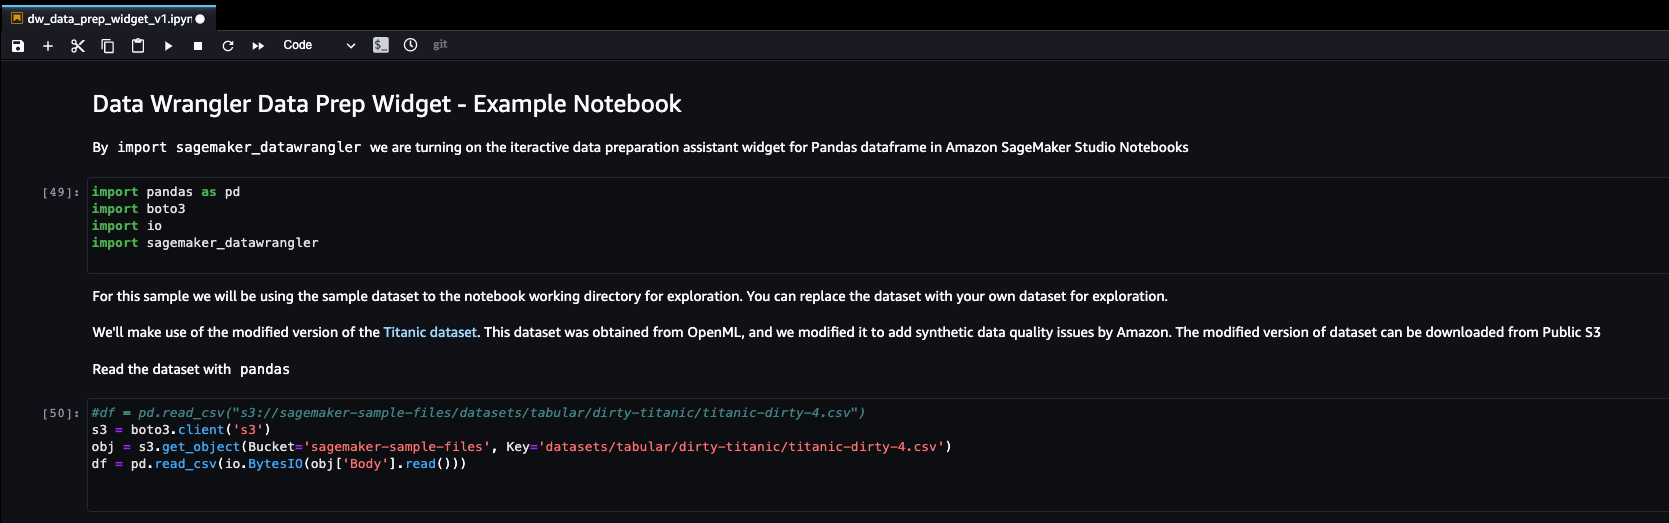 widget persiapan data wrangler data - contoh notebook